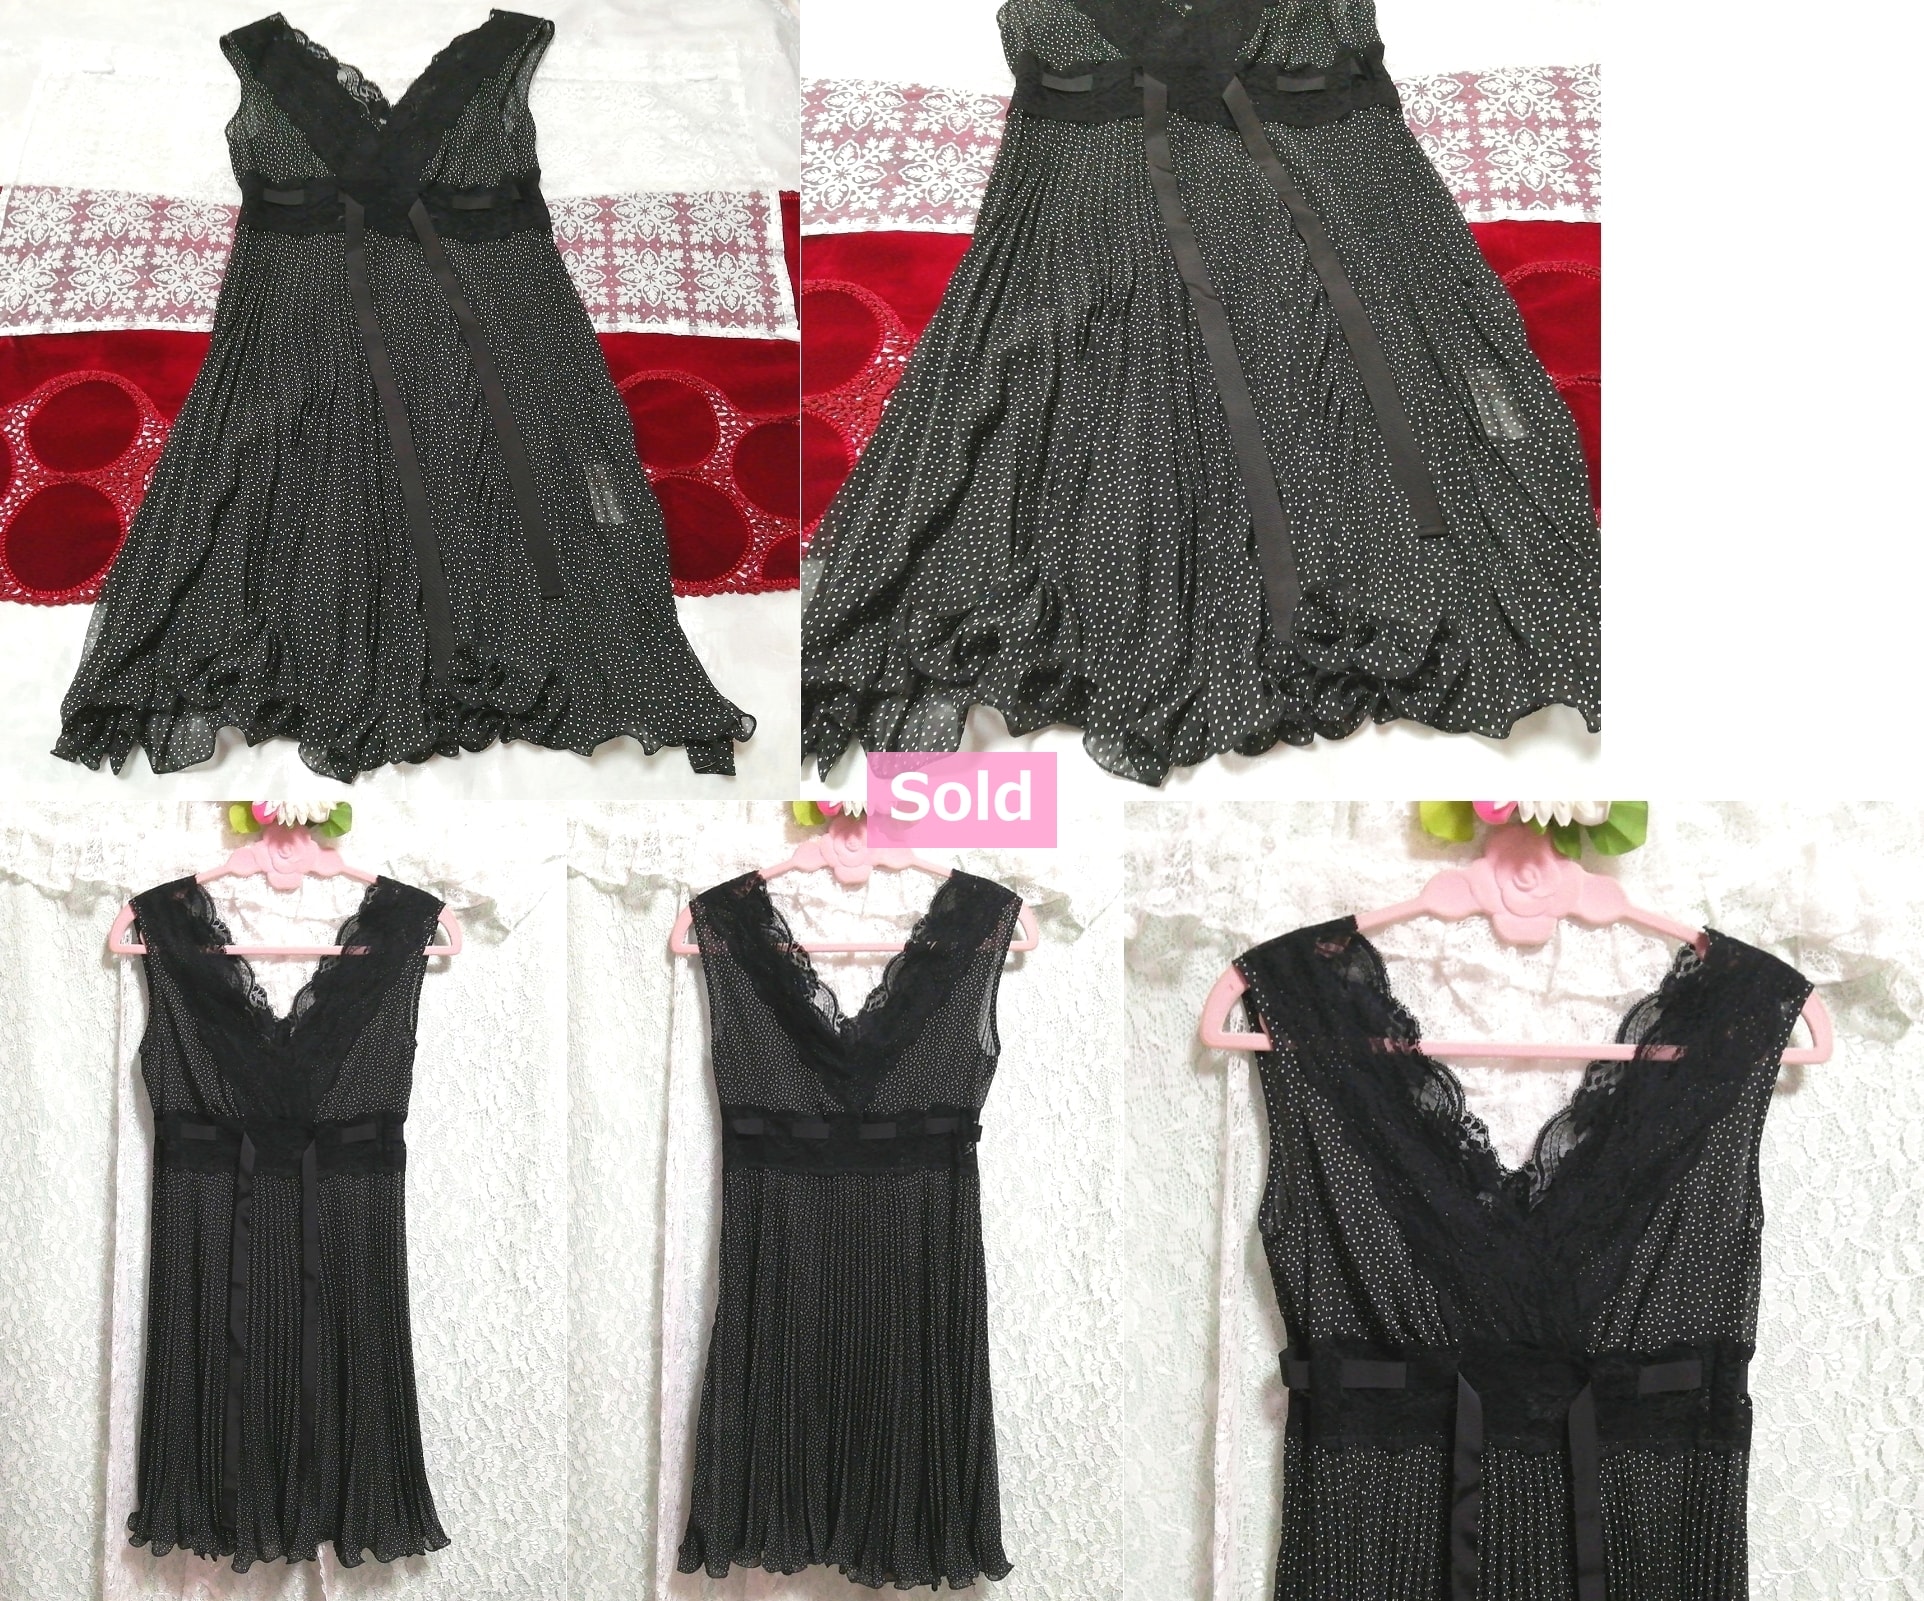 Black lace polka dot chiffon negligee nightgown nightwear sleeveless dress, fashion, ladies' fashion, nightwear, pajamas